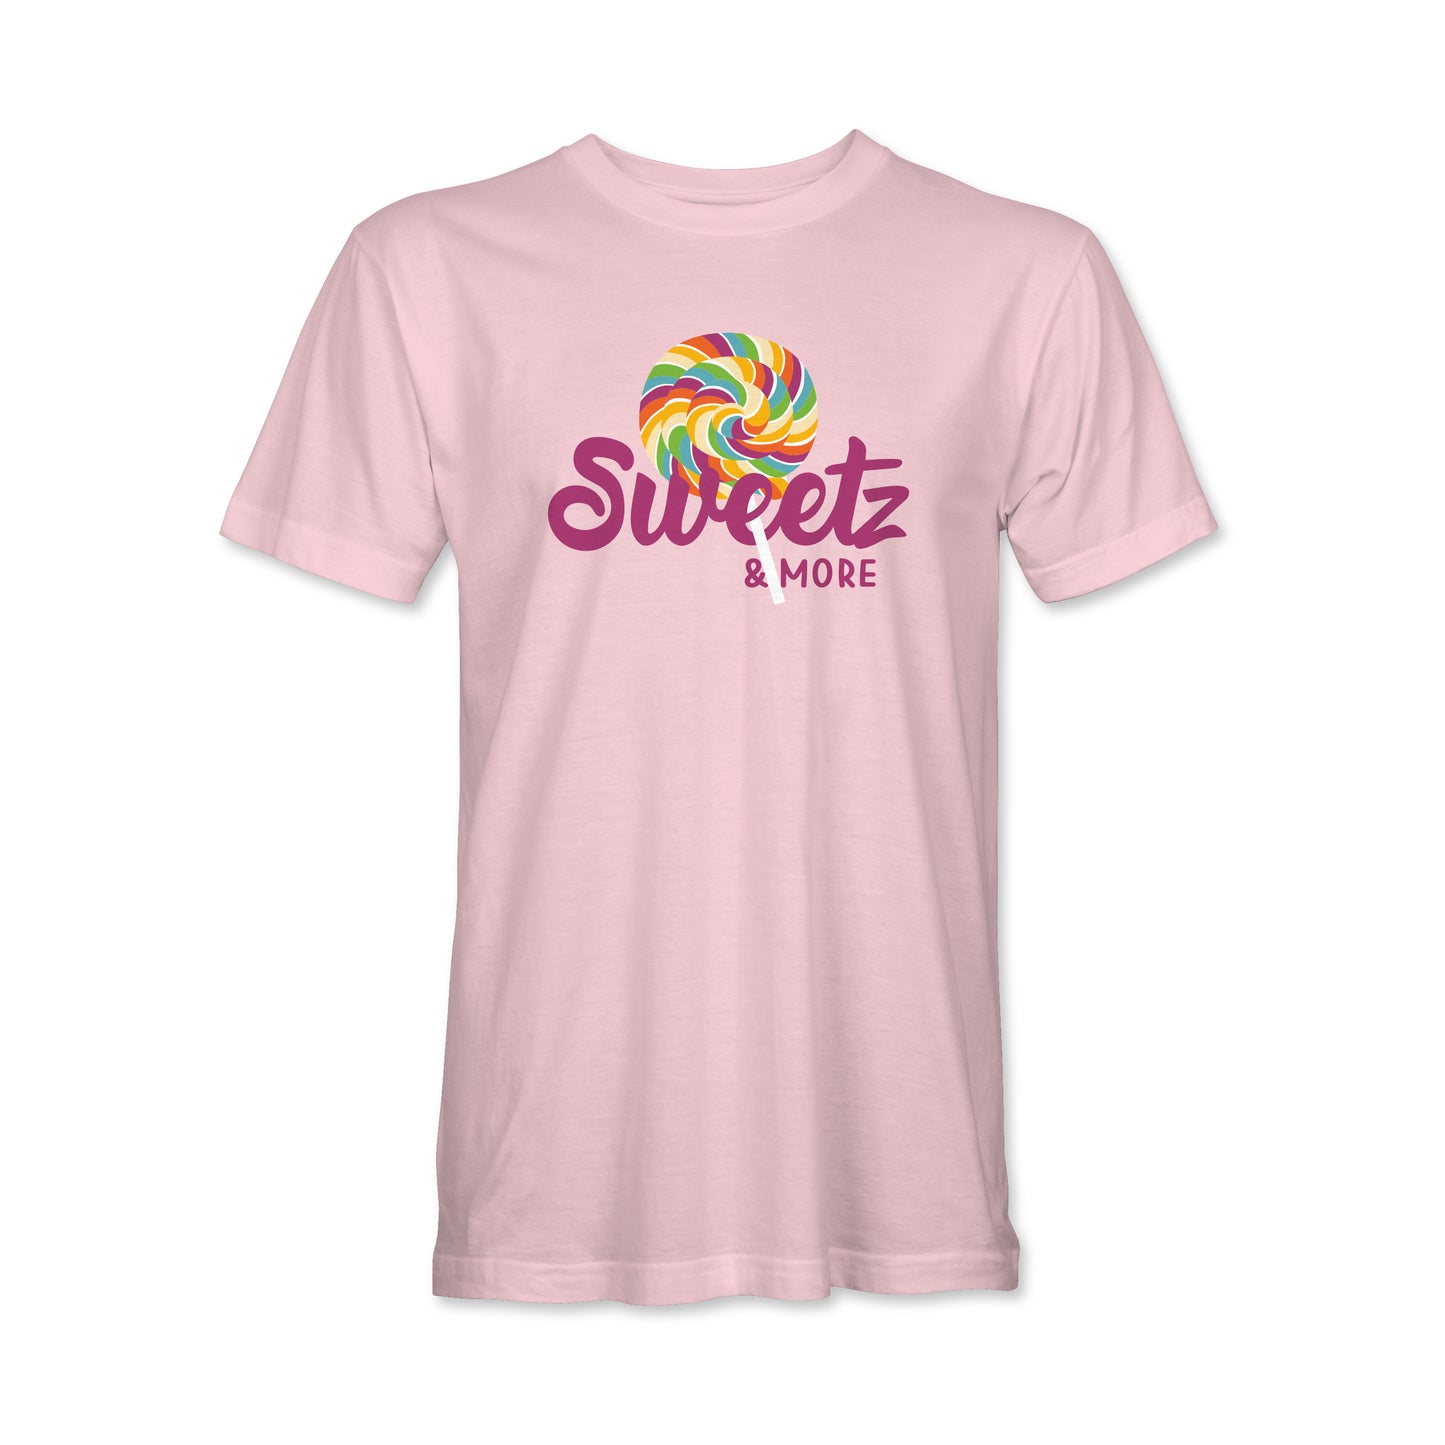 Sweetz Shirts